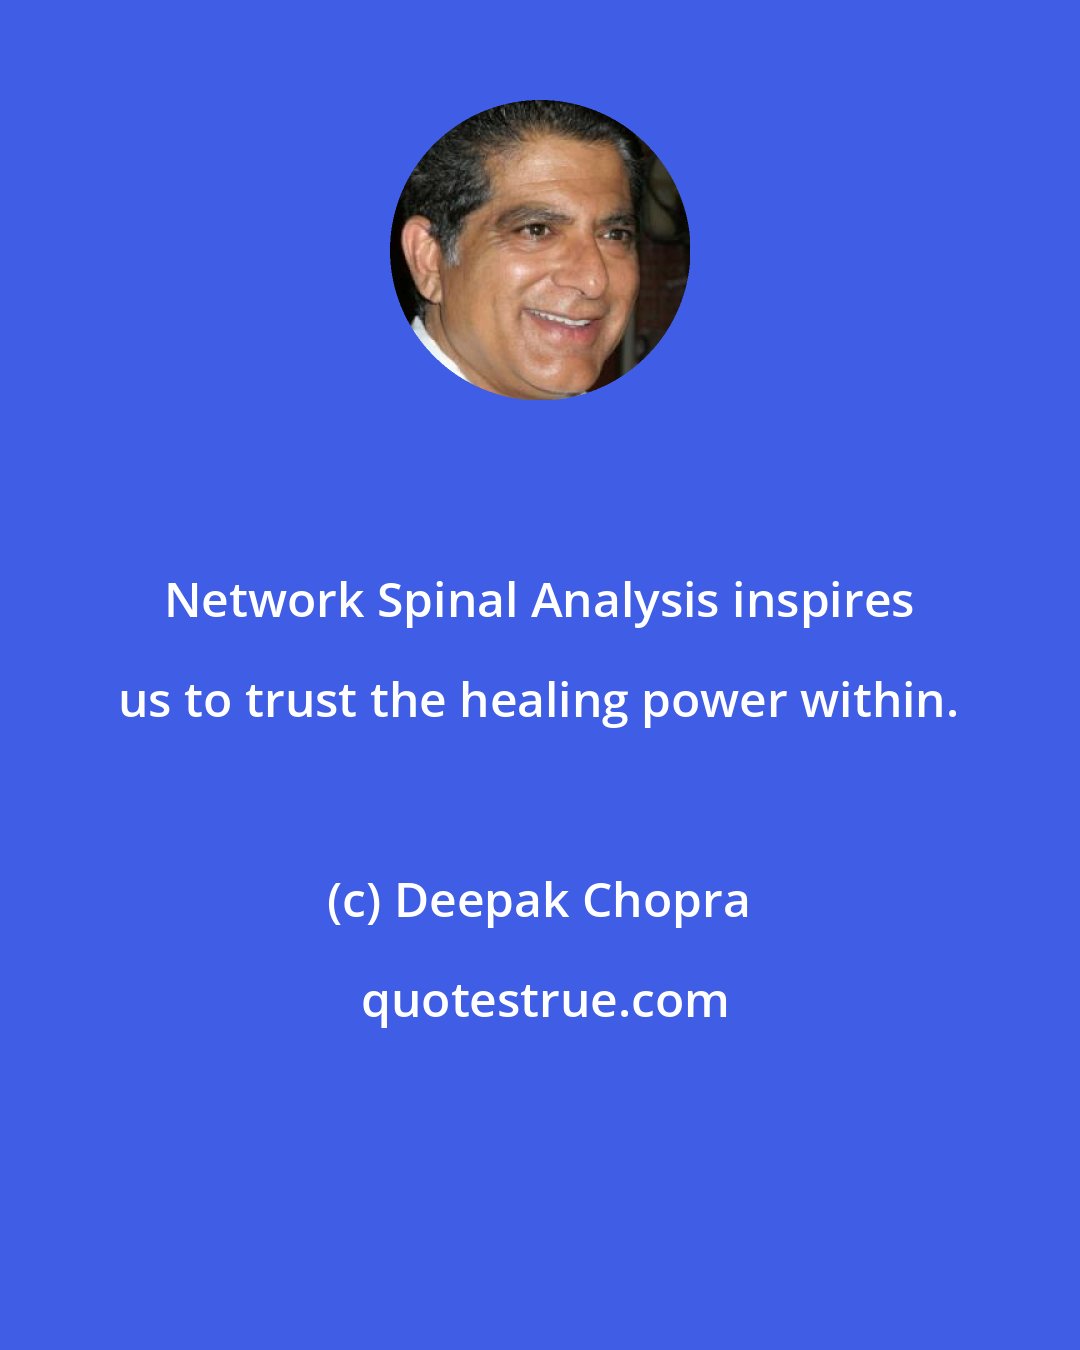 Deepak Chopra: Network Spinal Analysis inspires us to trust the healing power within.